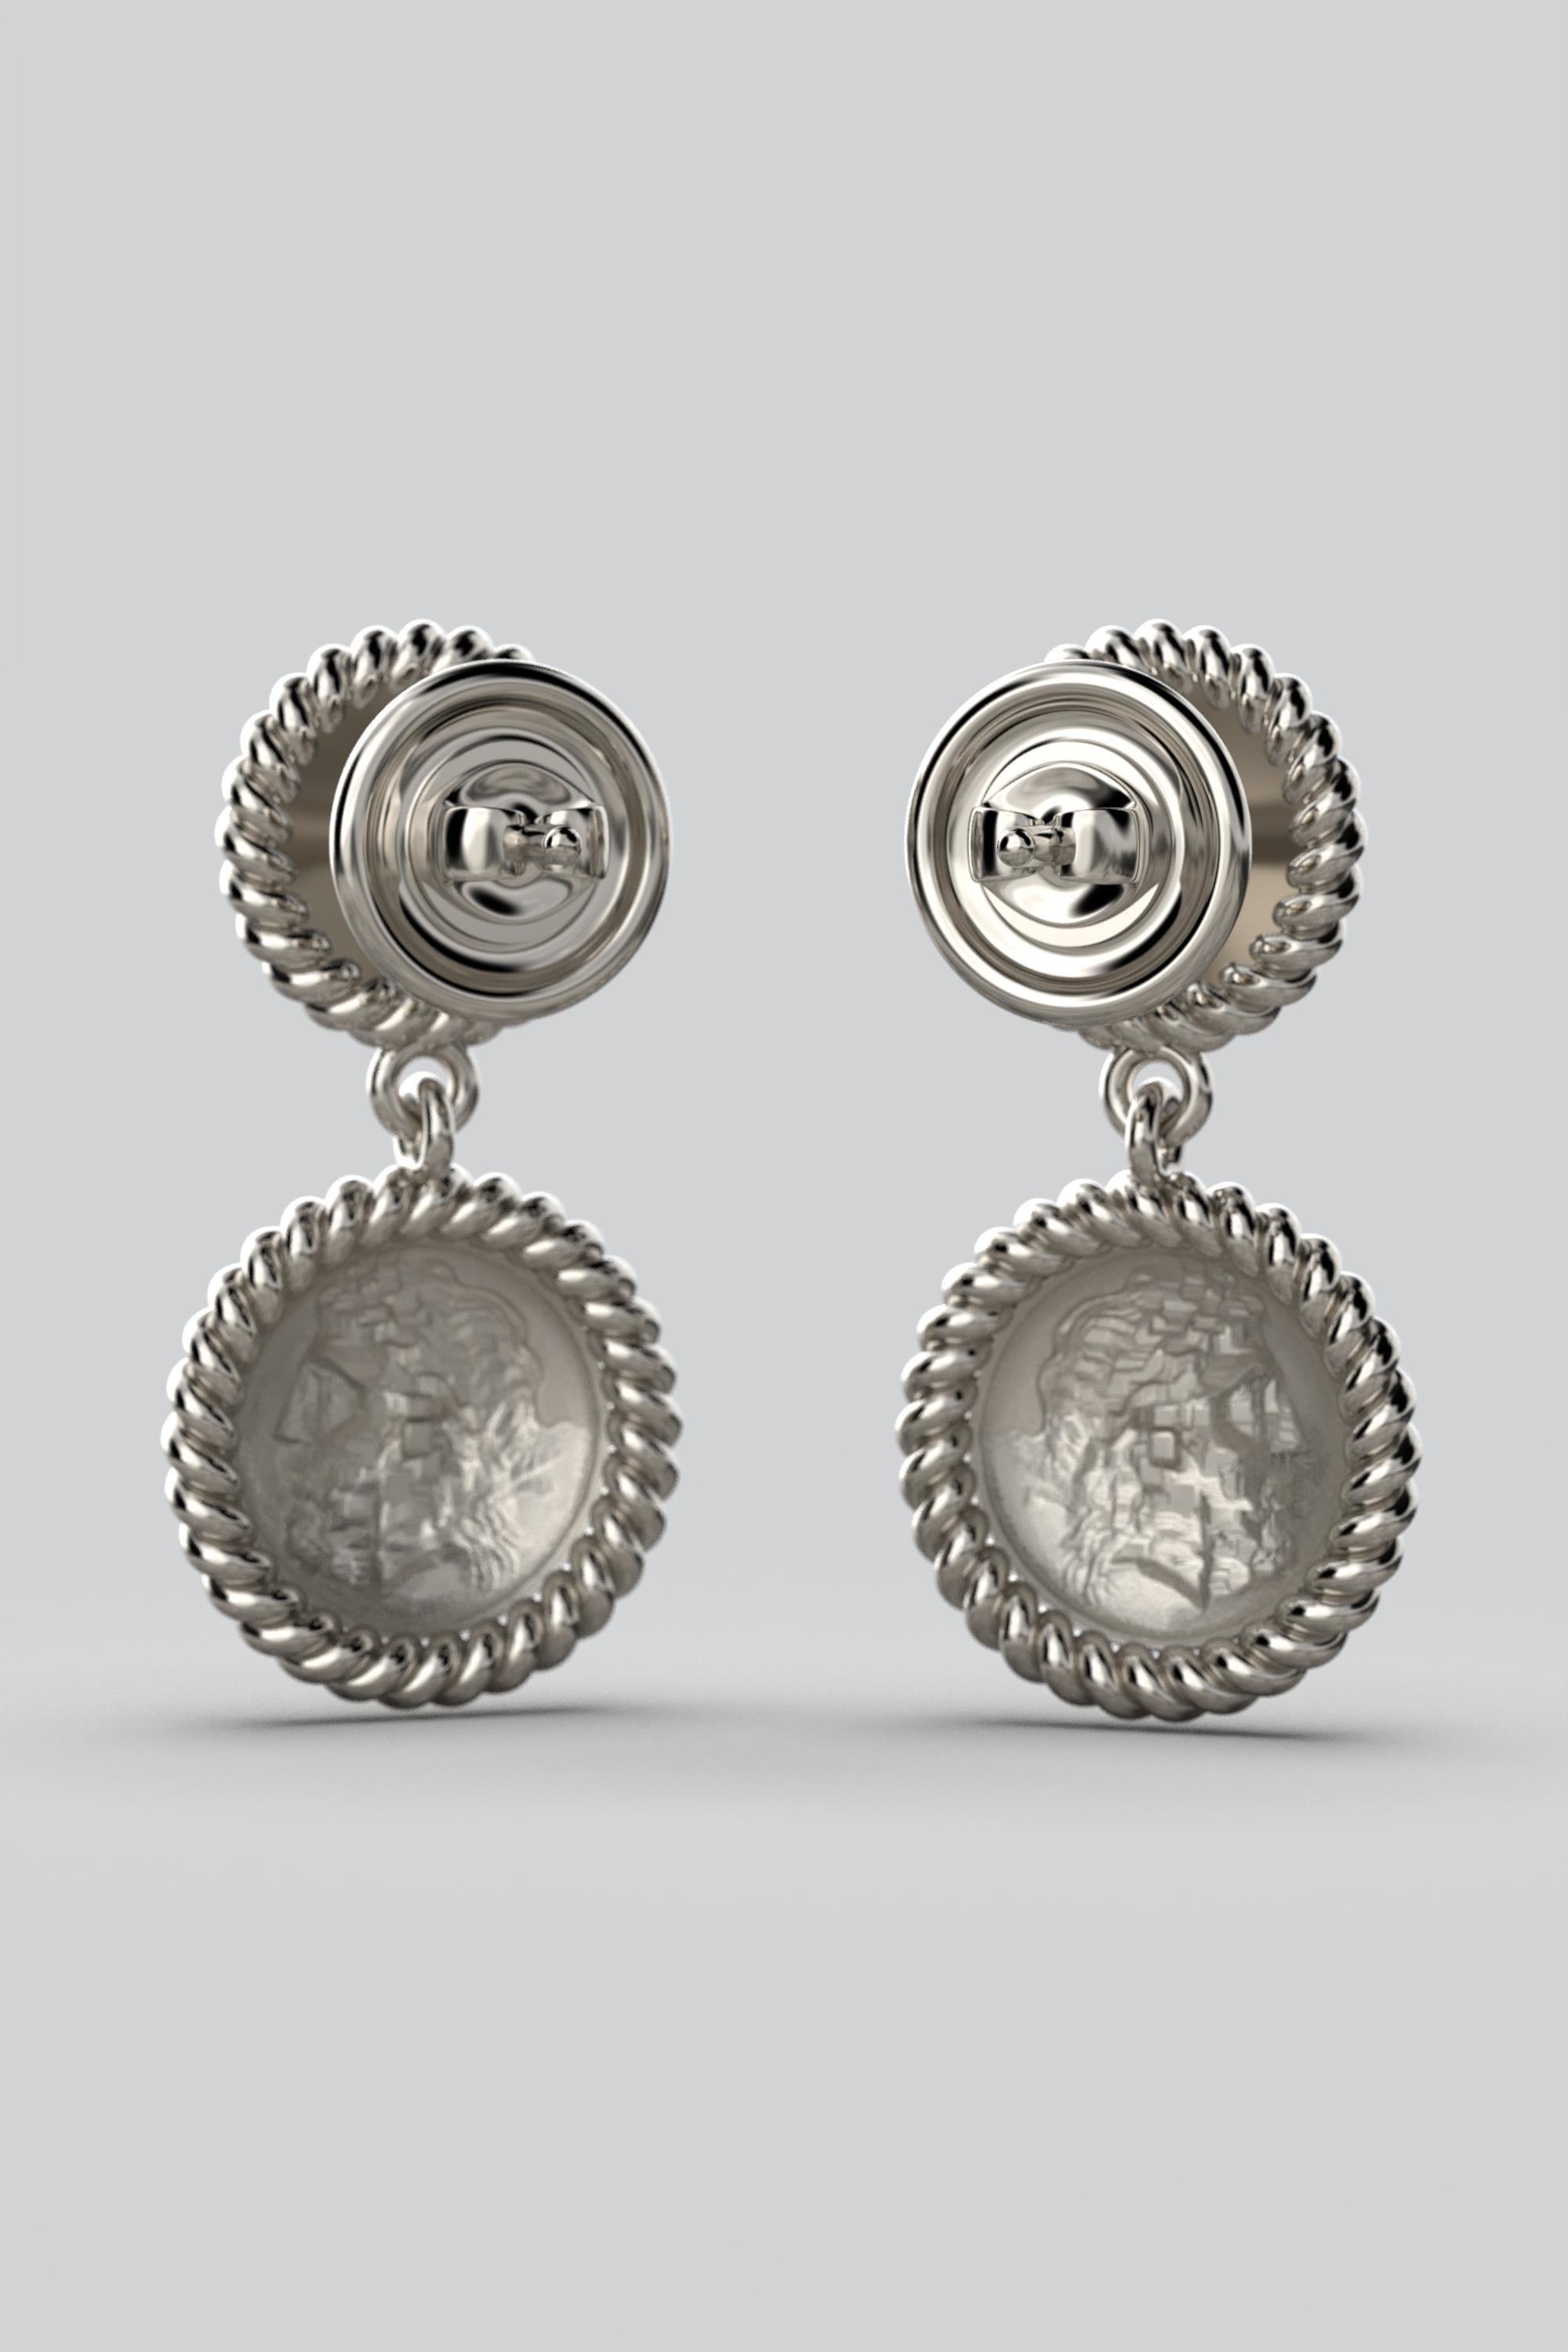 Dangle Earrings in 18k solid Gold, Ancient Greek Style, Zeus Coin Earrings For Sale 4